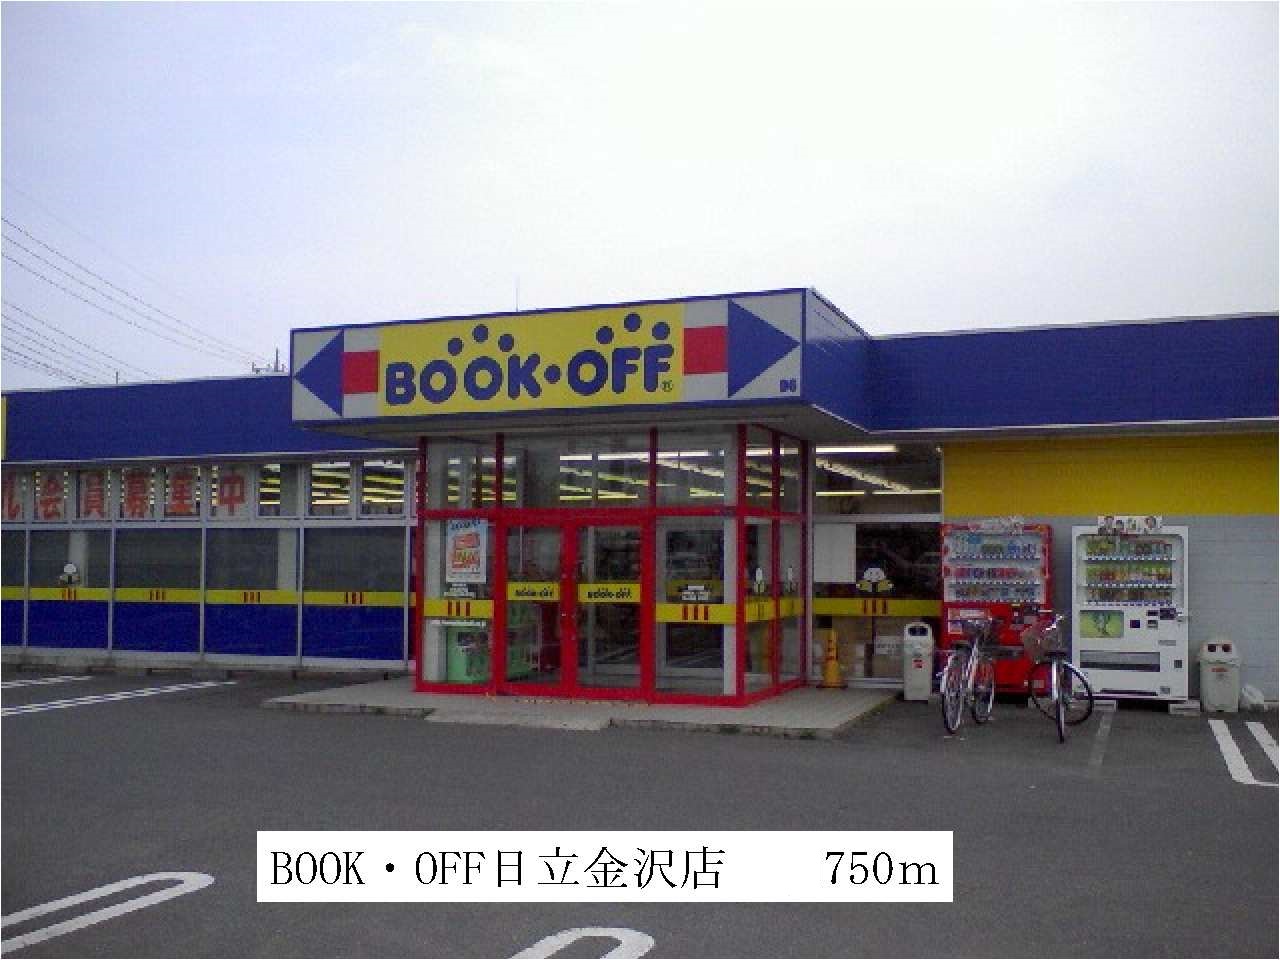 Rental video. BOOKOFF Hitachi Kanazawa shop 750m up (video rental)